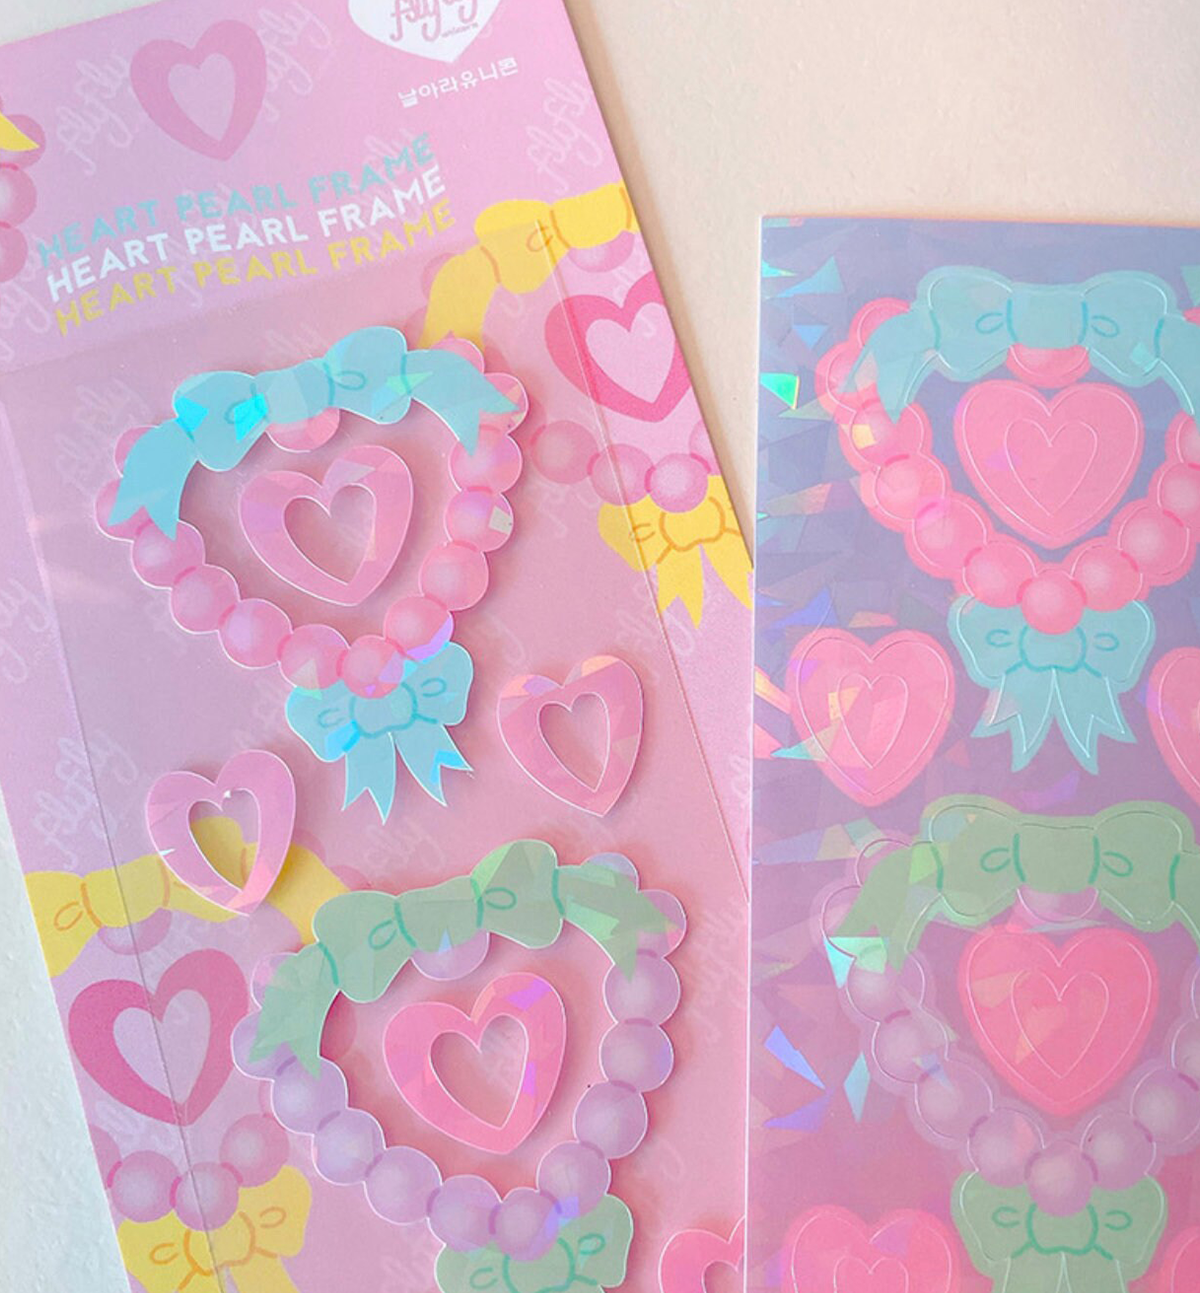 Heart Pearl Frame Sticker